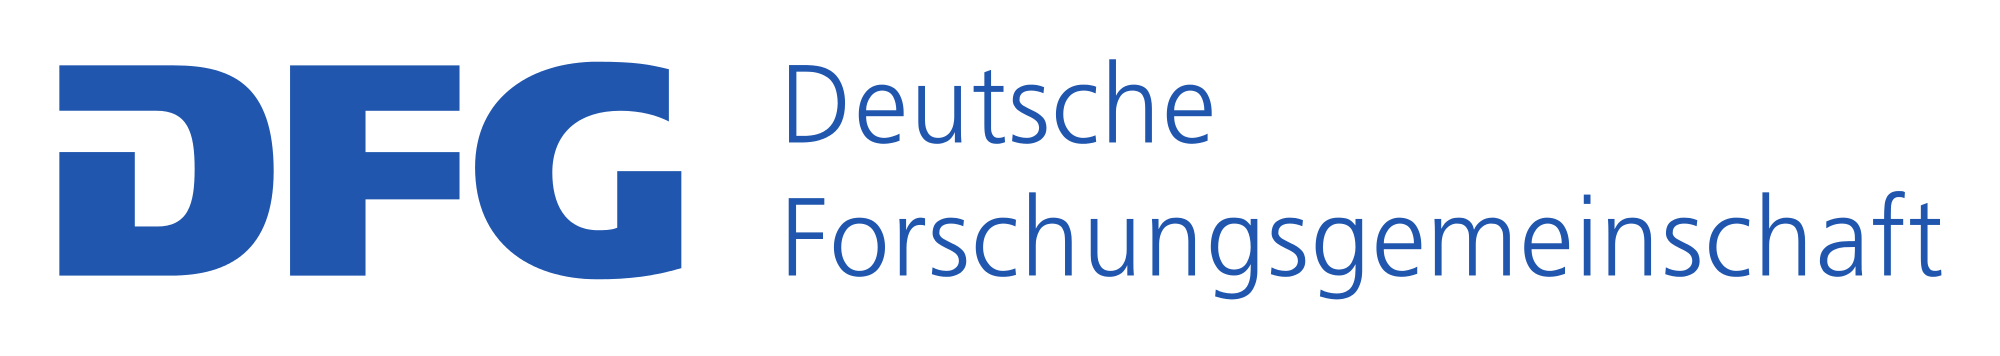 DFG, German Research Foundation